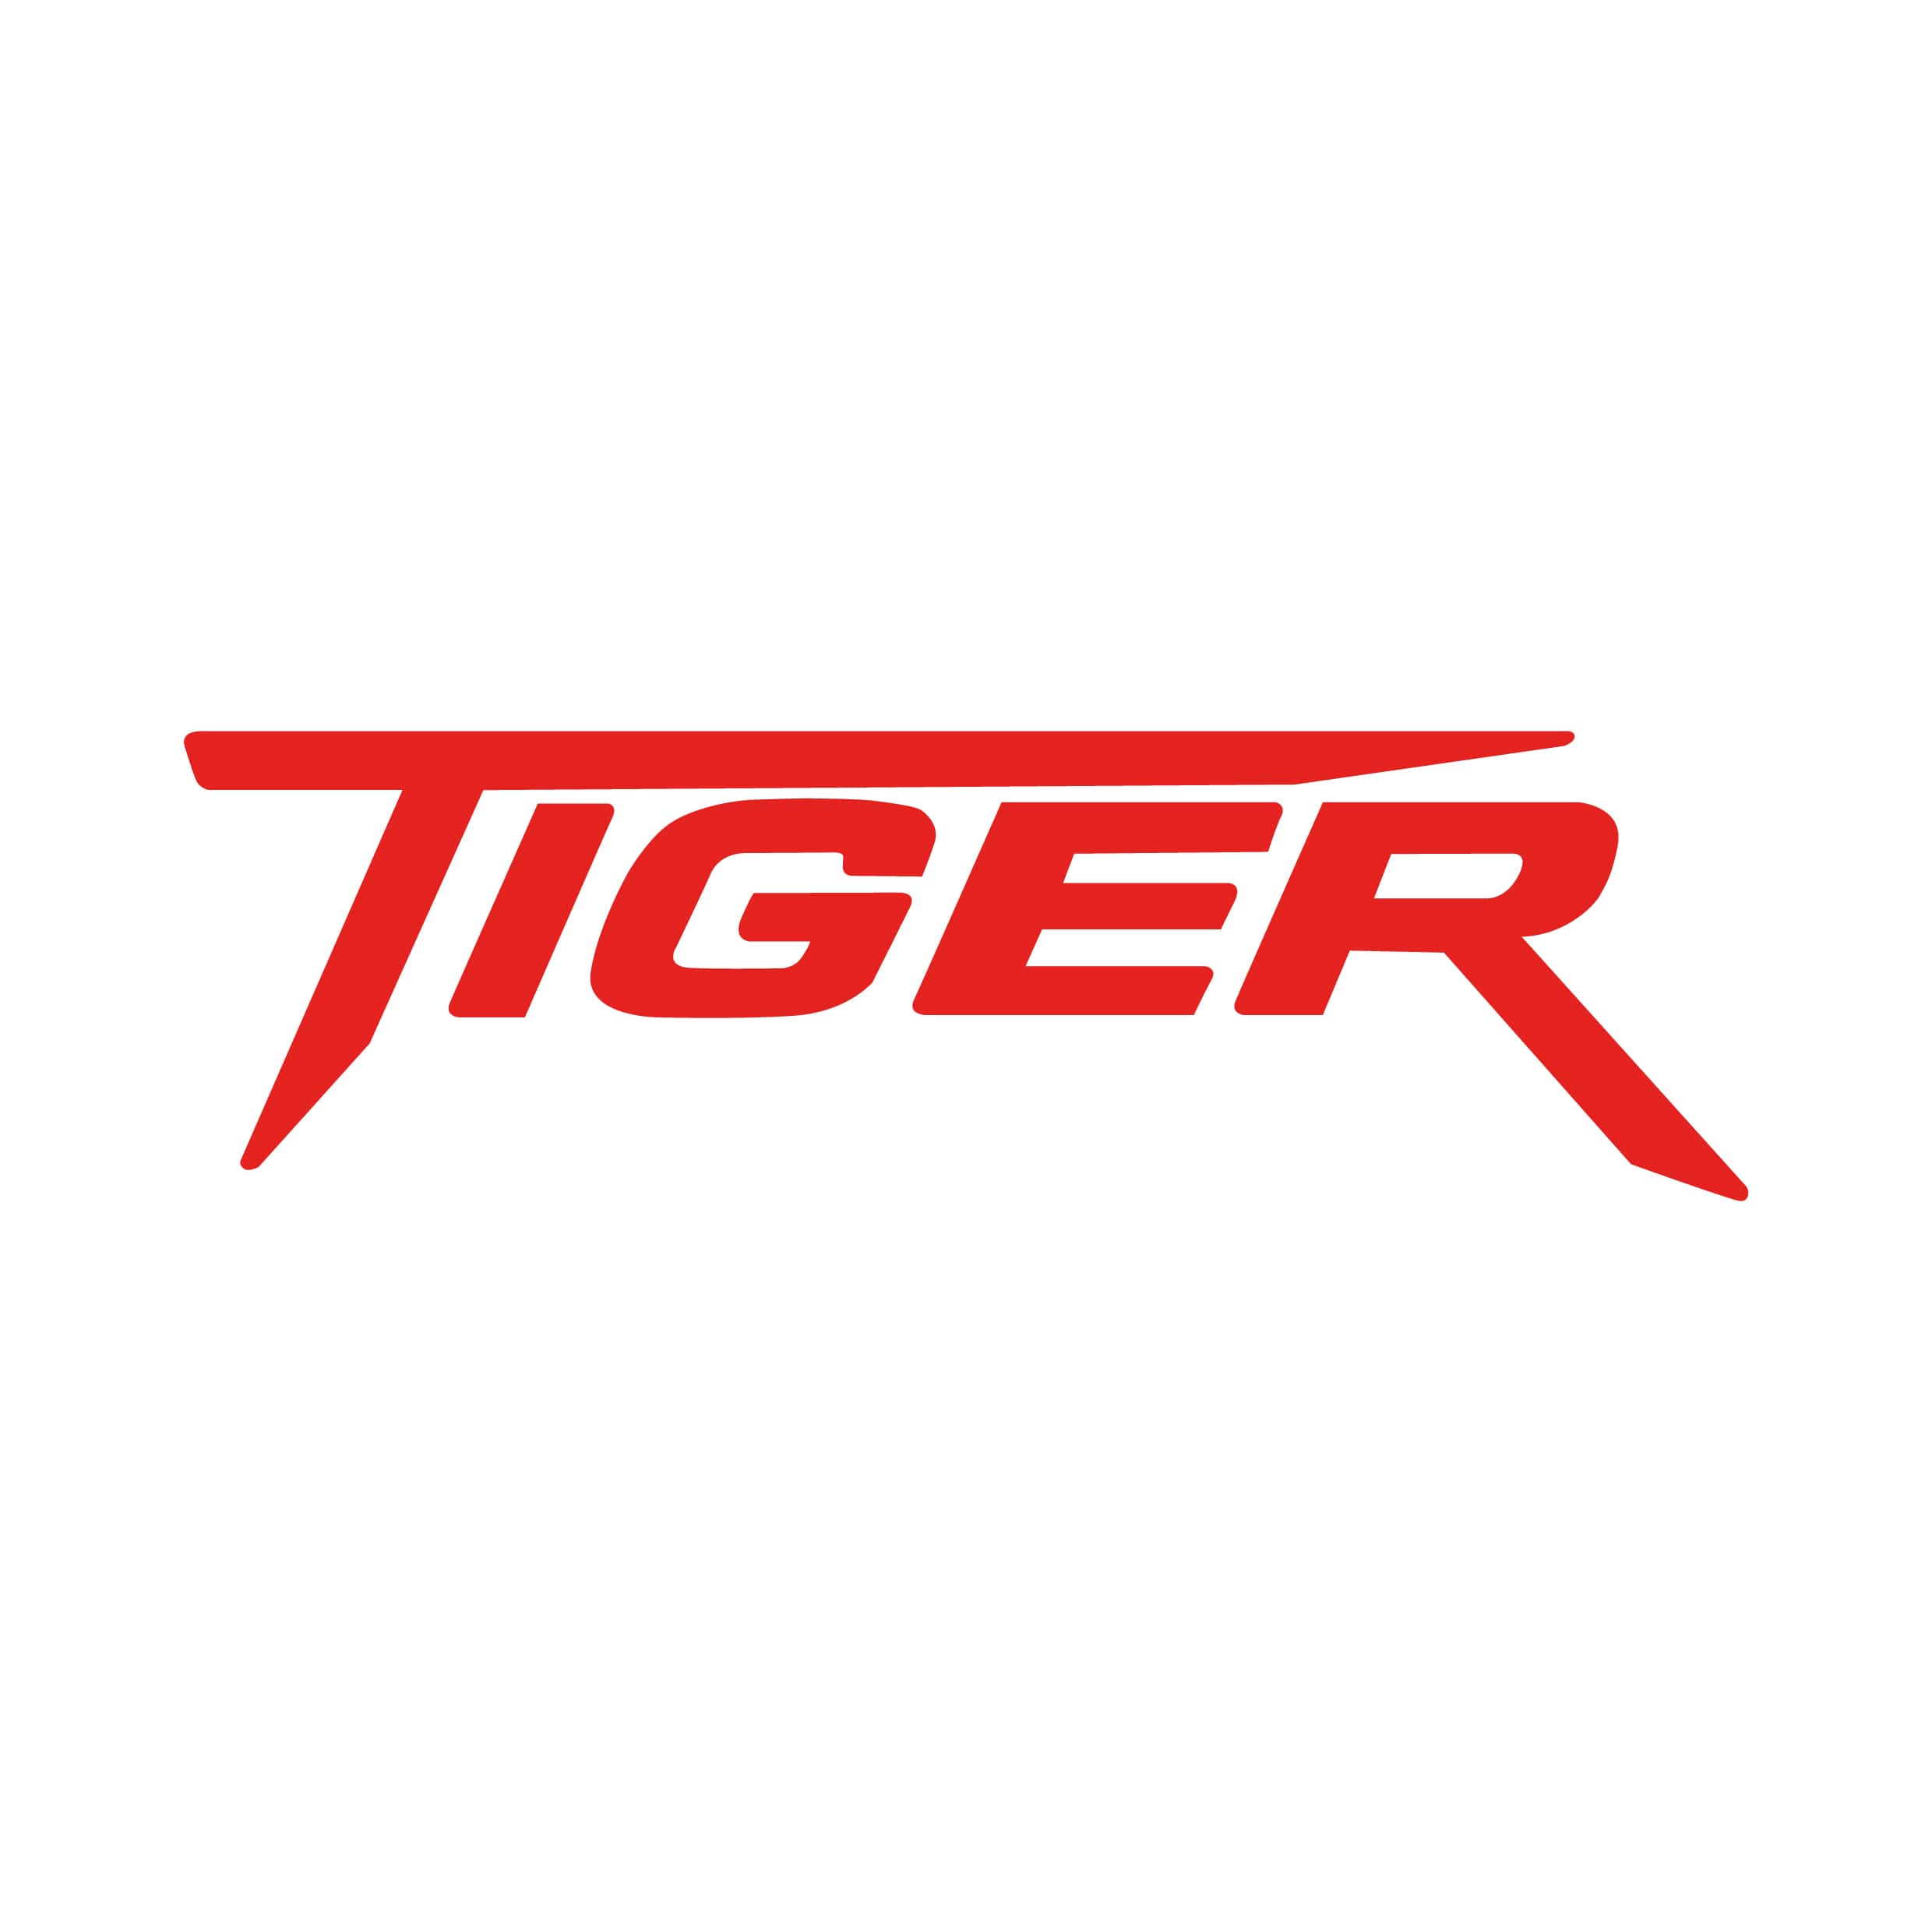 stickers-triumph-tiger-ref22-autocollant-moto-sticker-deux-roue-autocollants-decals-sponsors-tuning-sport-logo-bike-scooter-min